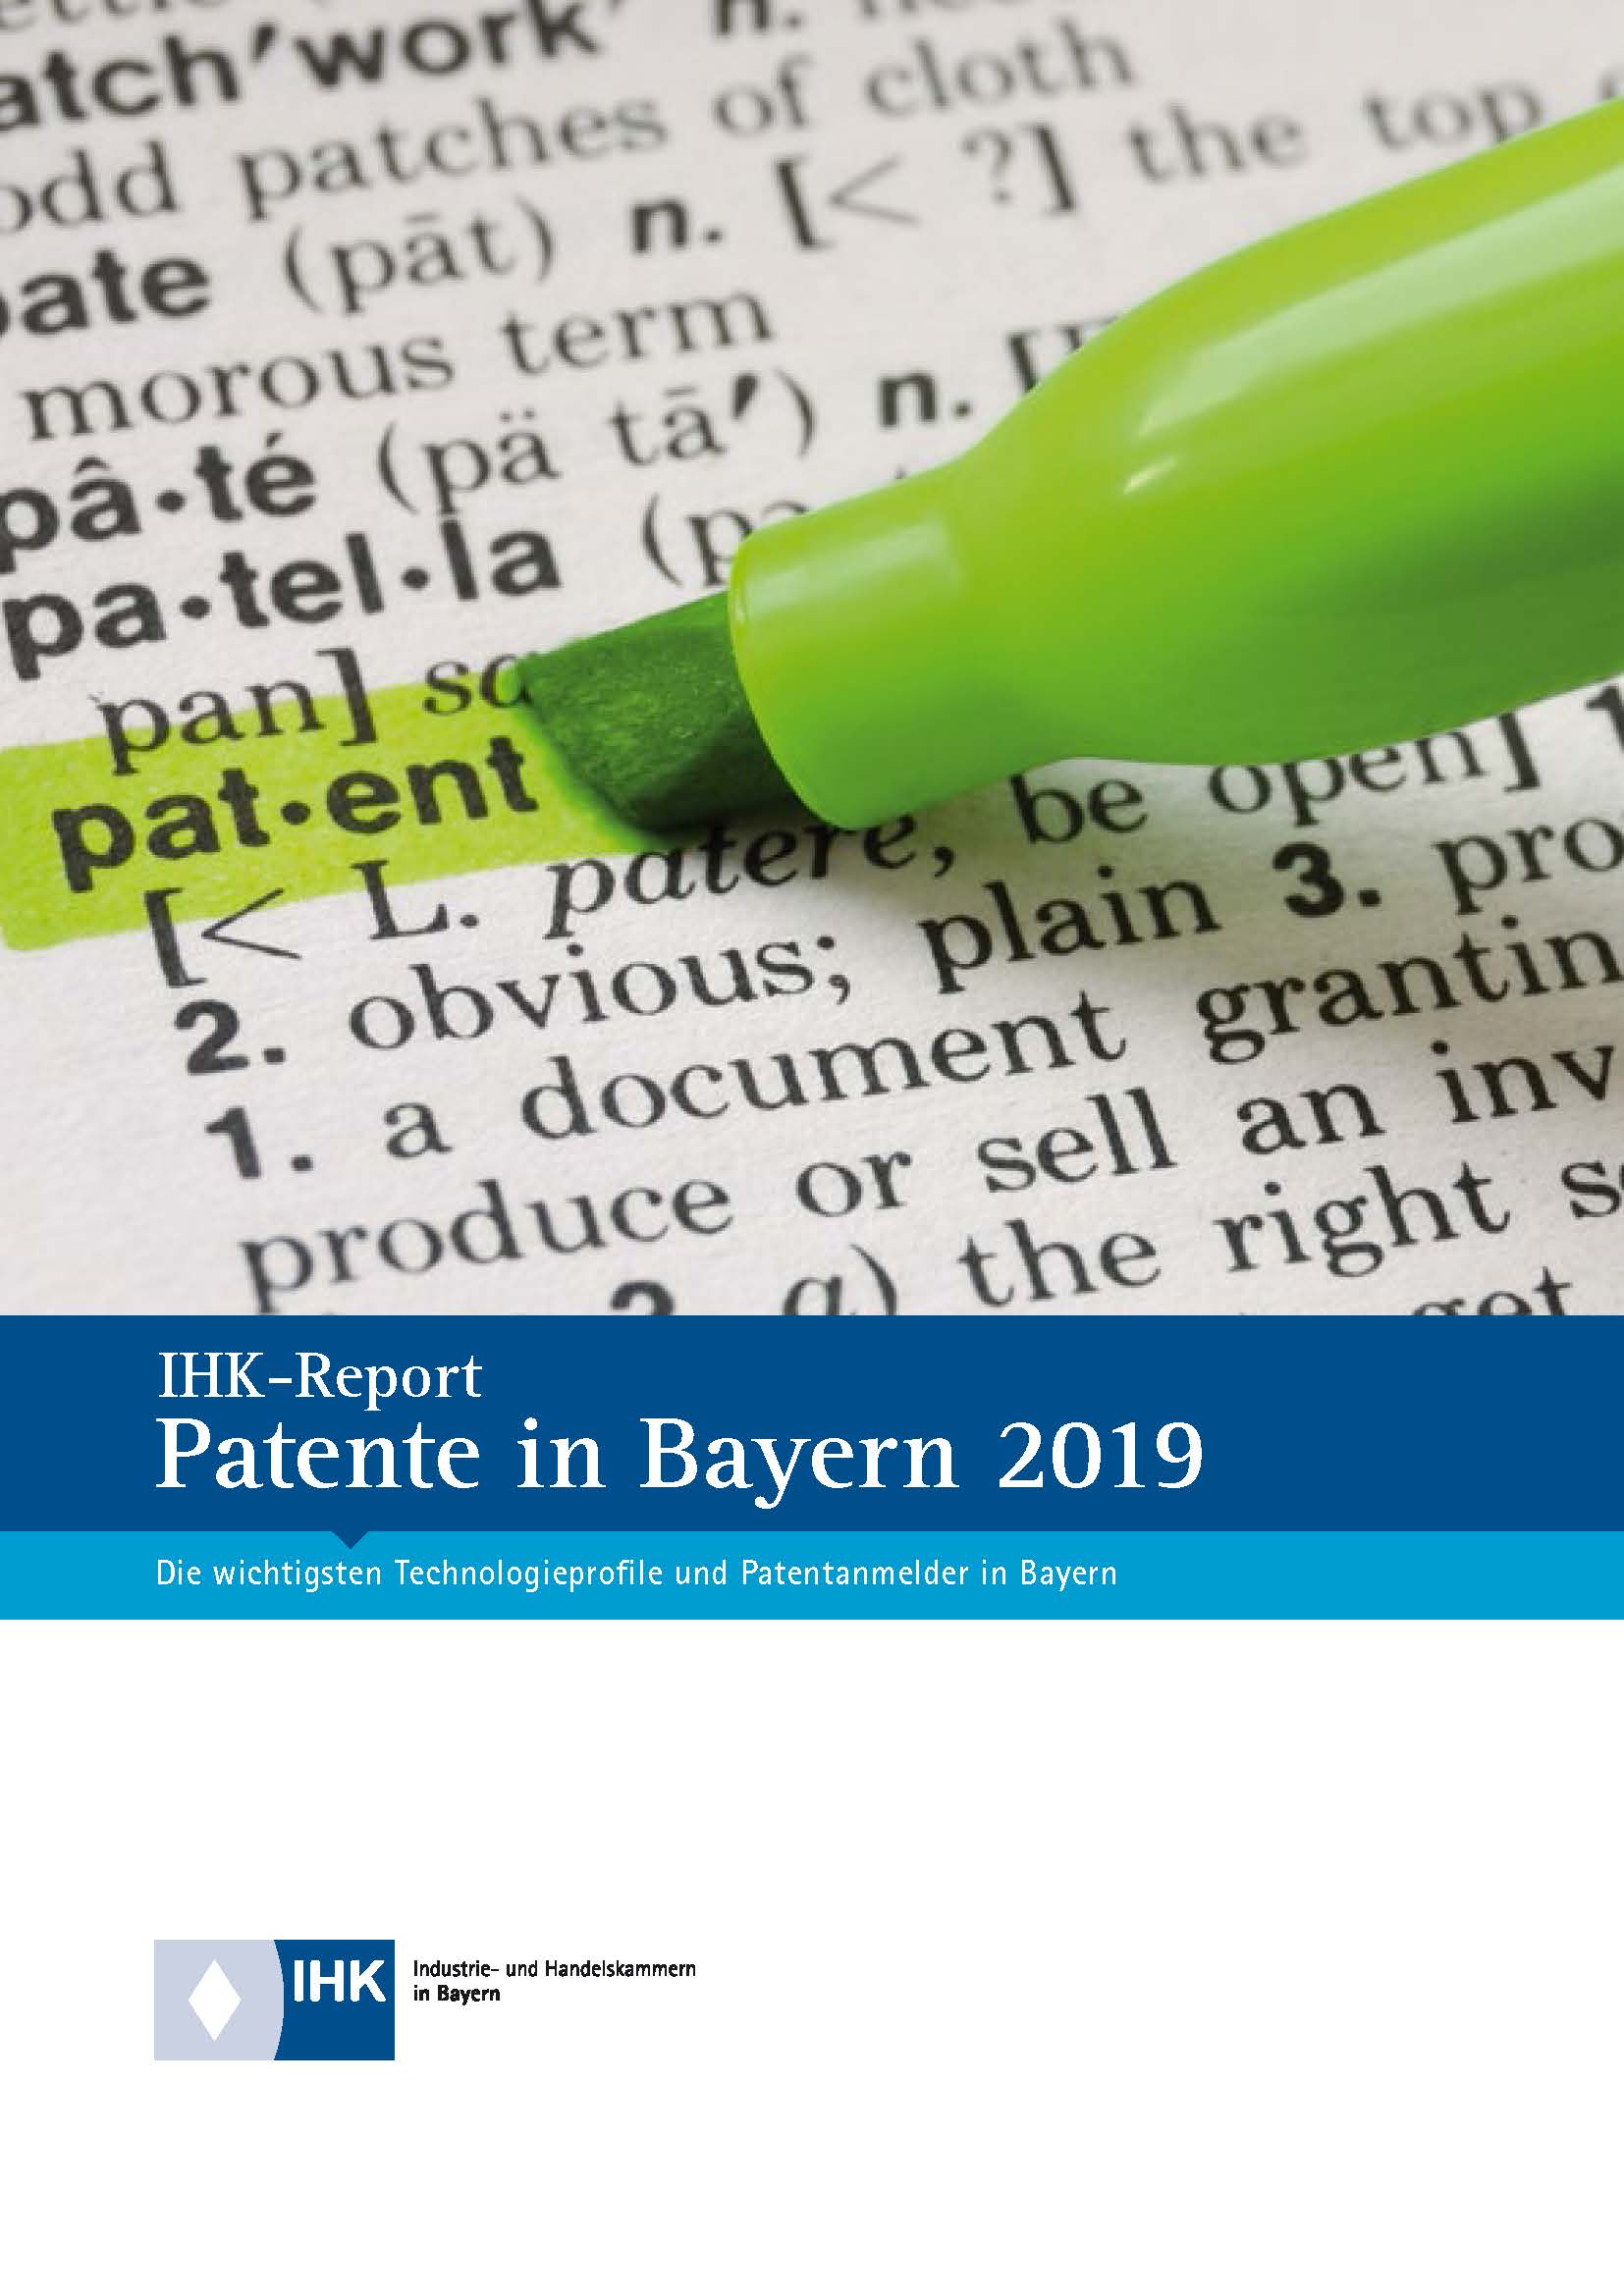 IHK-Report Patente in Bayern 2019